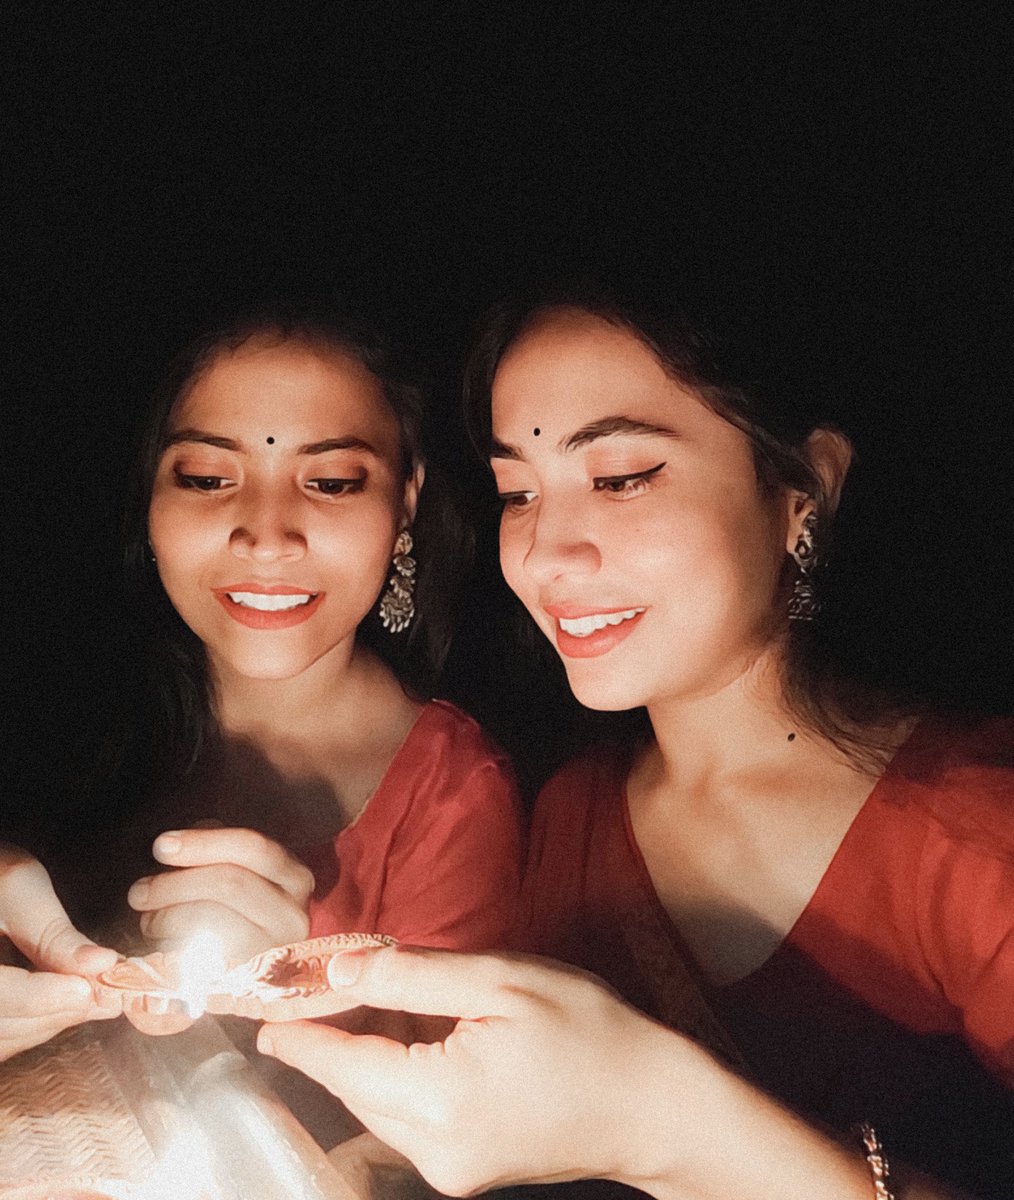 My favourite pic from this Diwali ❤️

#Twins #sisterlove #sisters #latepost #Diwali #Diwali2020 #SareeTwitter #saree